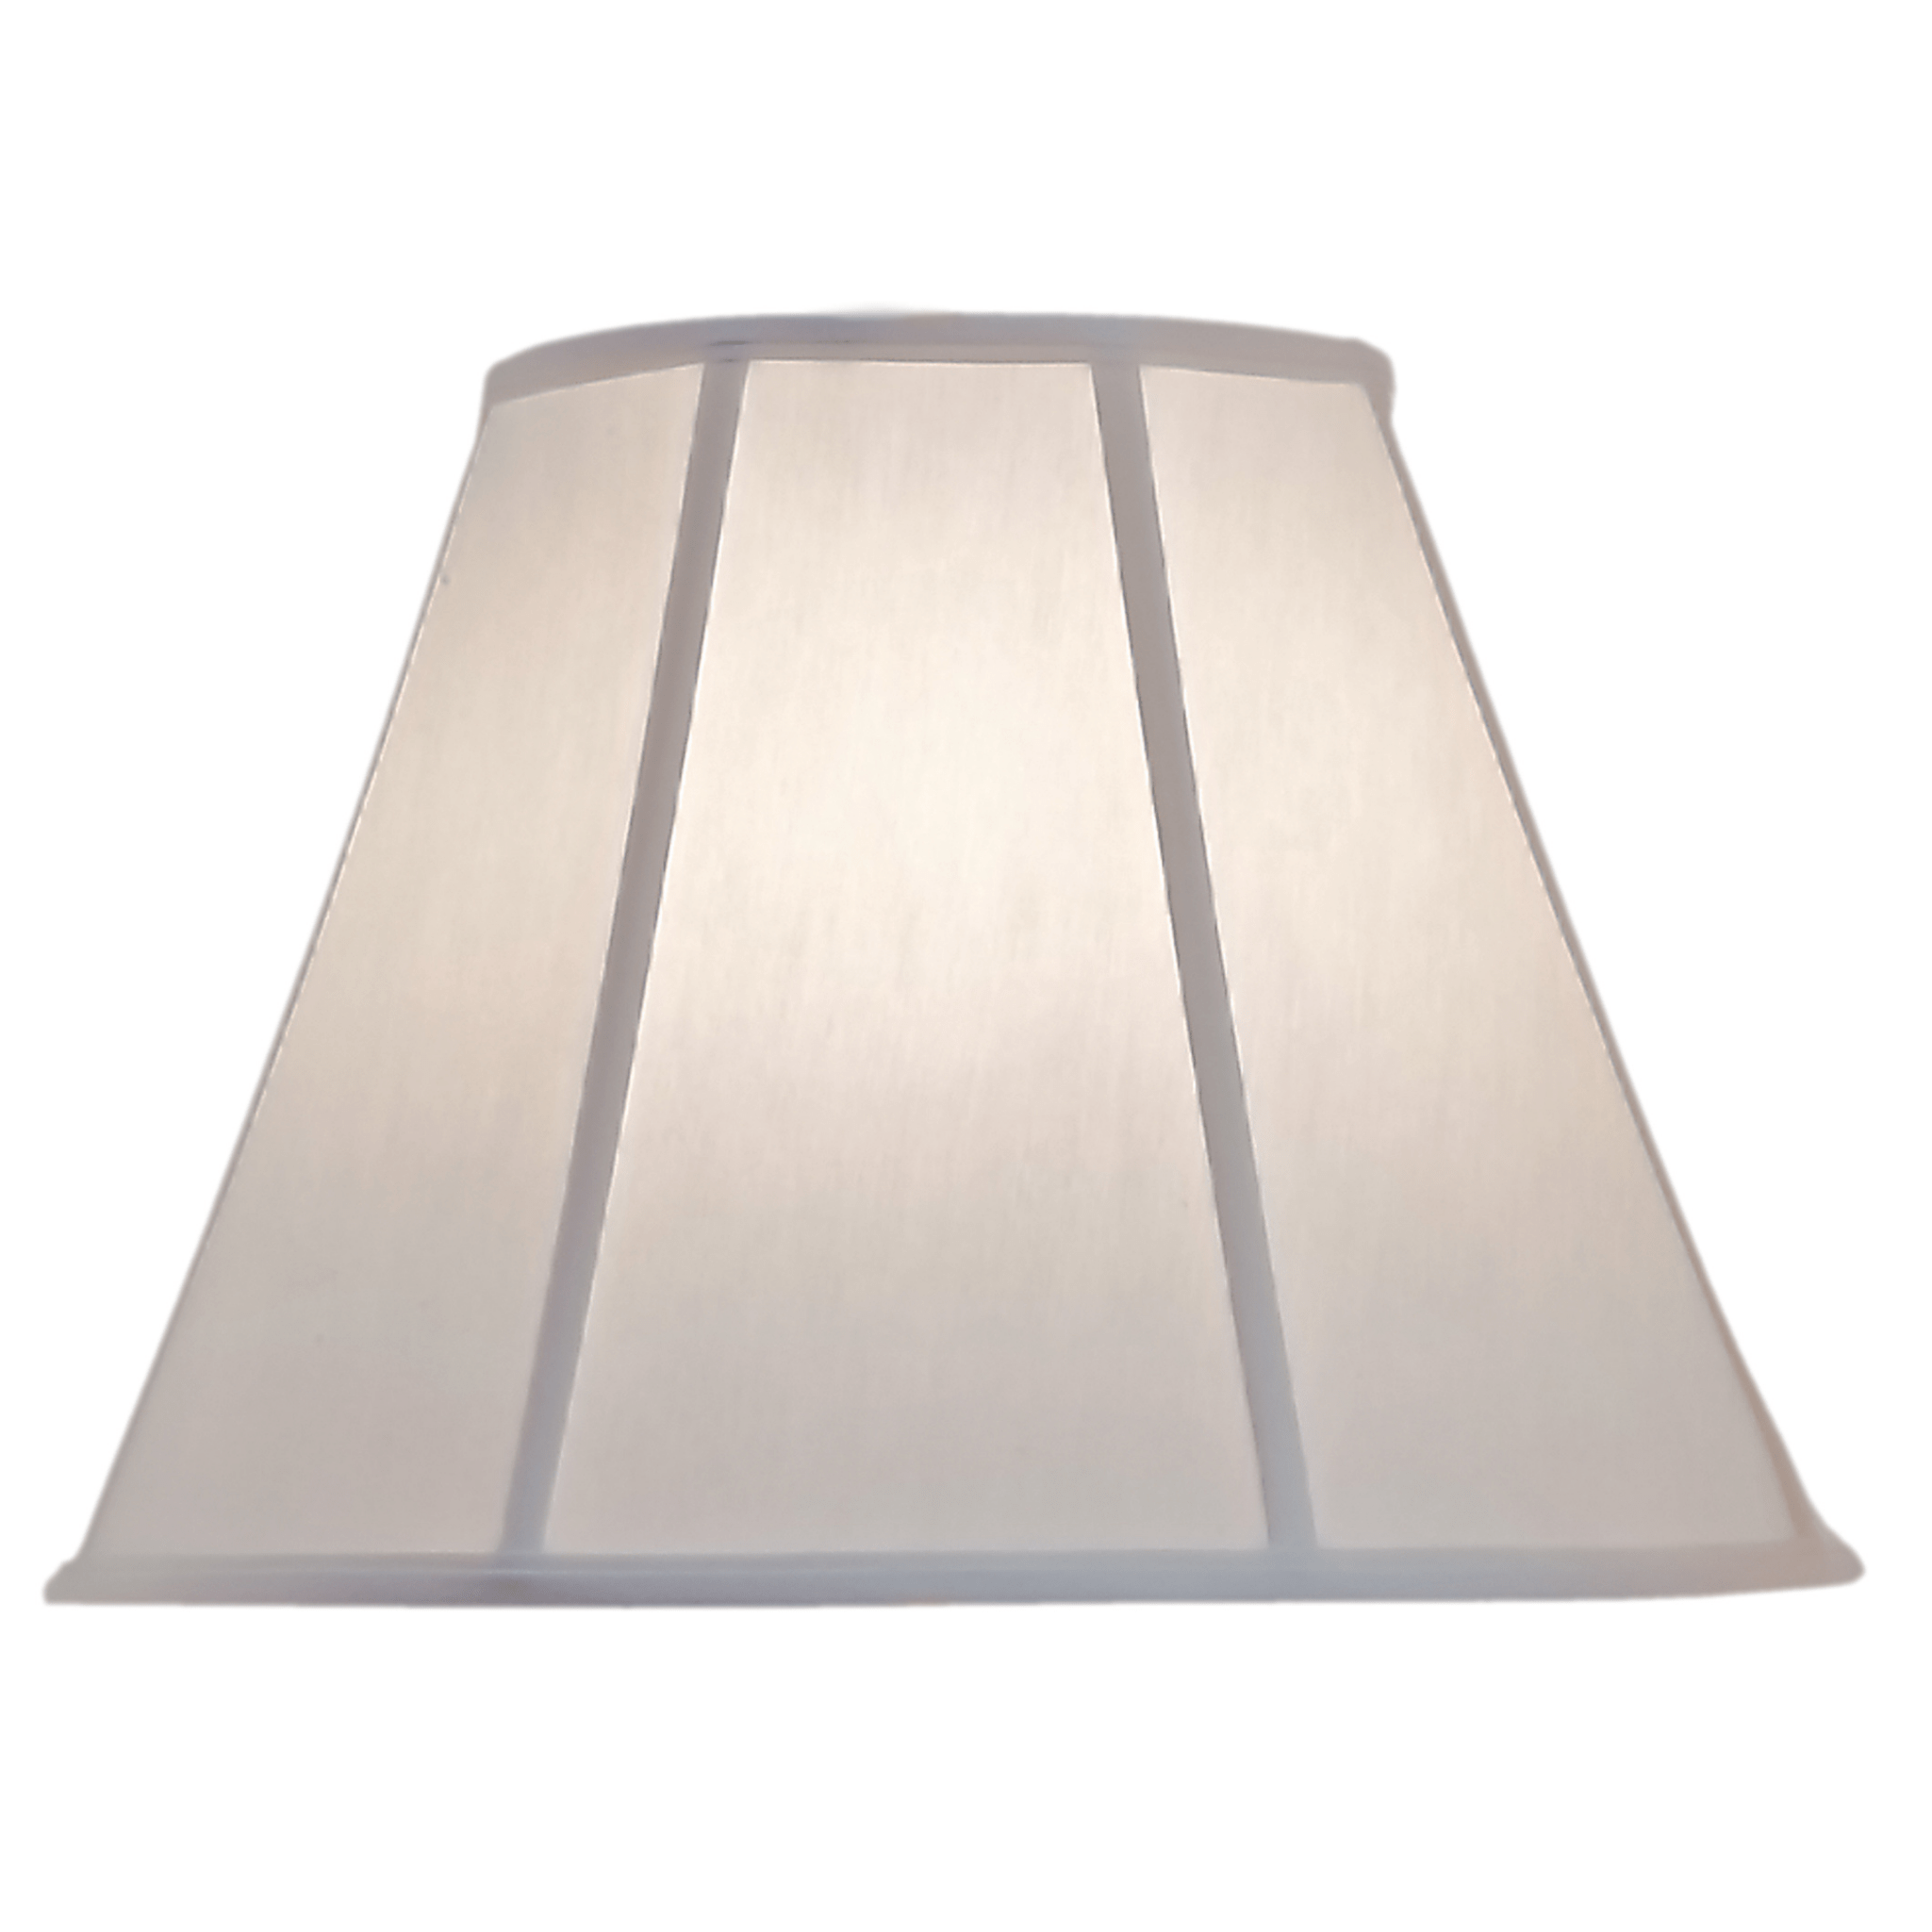 Stiffel lamp shade Off White Stiffel Off White Shadow Softback Empire Lamp shade - 10 x 20 x 15